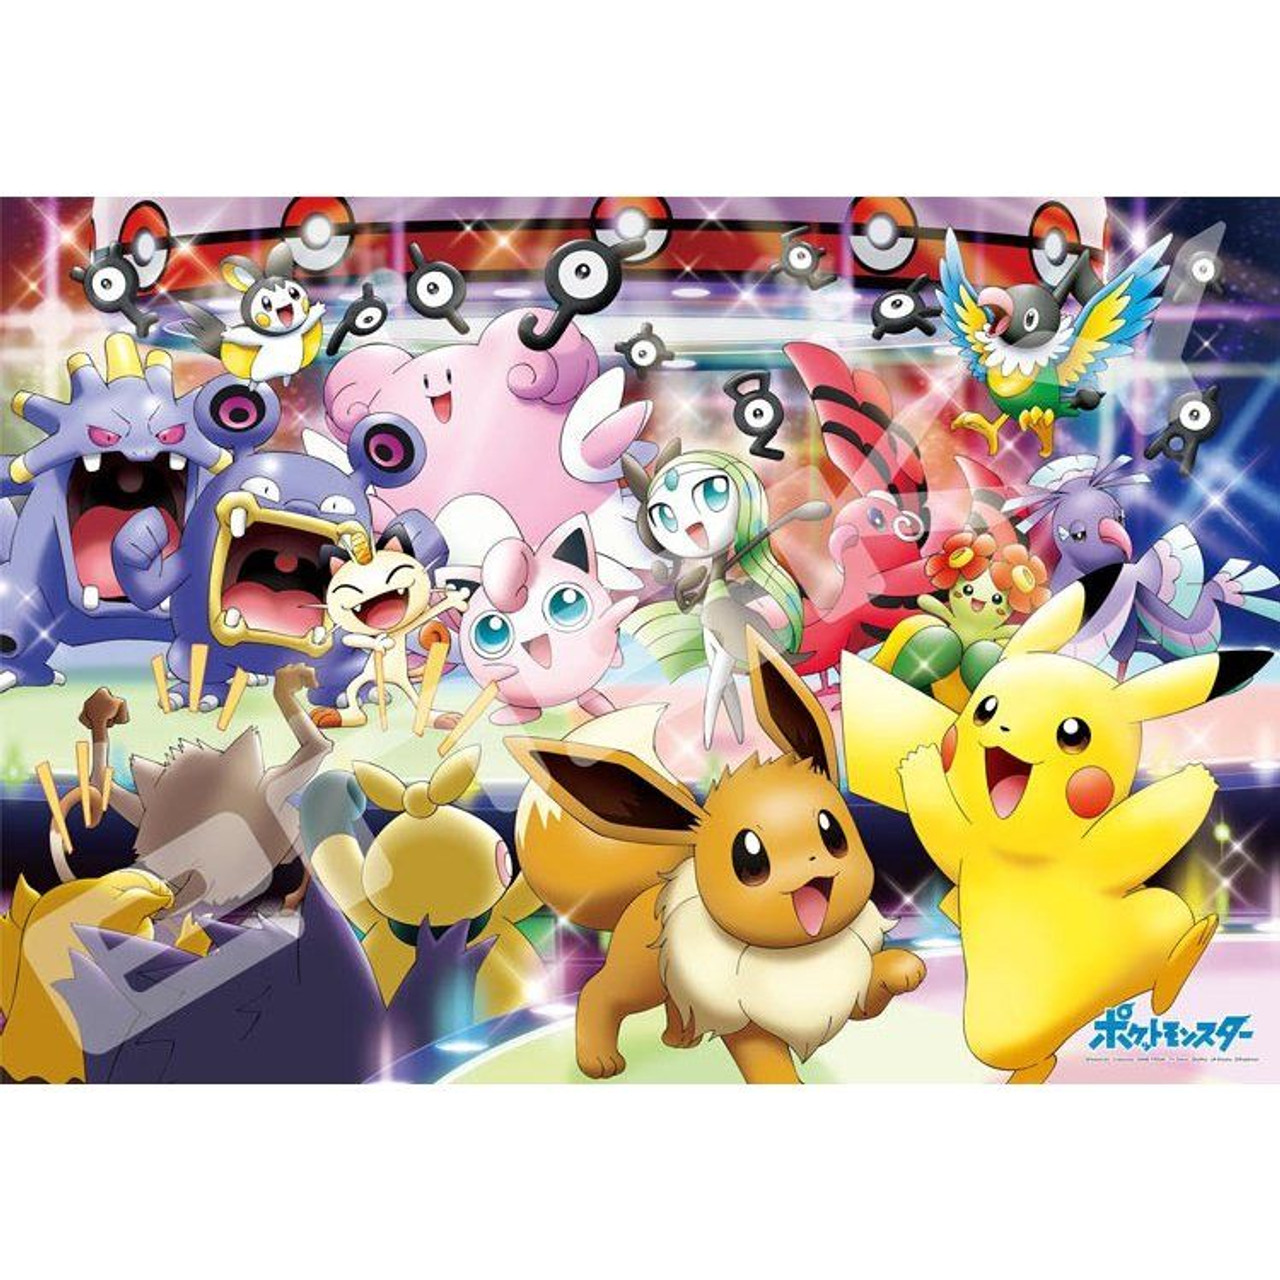 Pokemon PK1000-02 Let's Make It Together Pikachu Blocks 1,000-Piece Puzzle